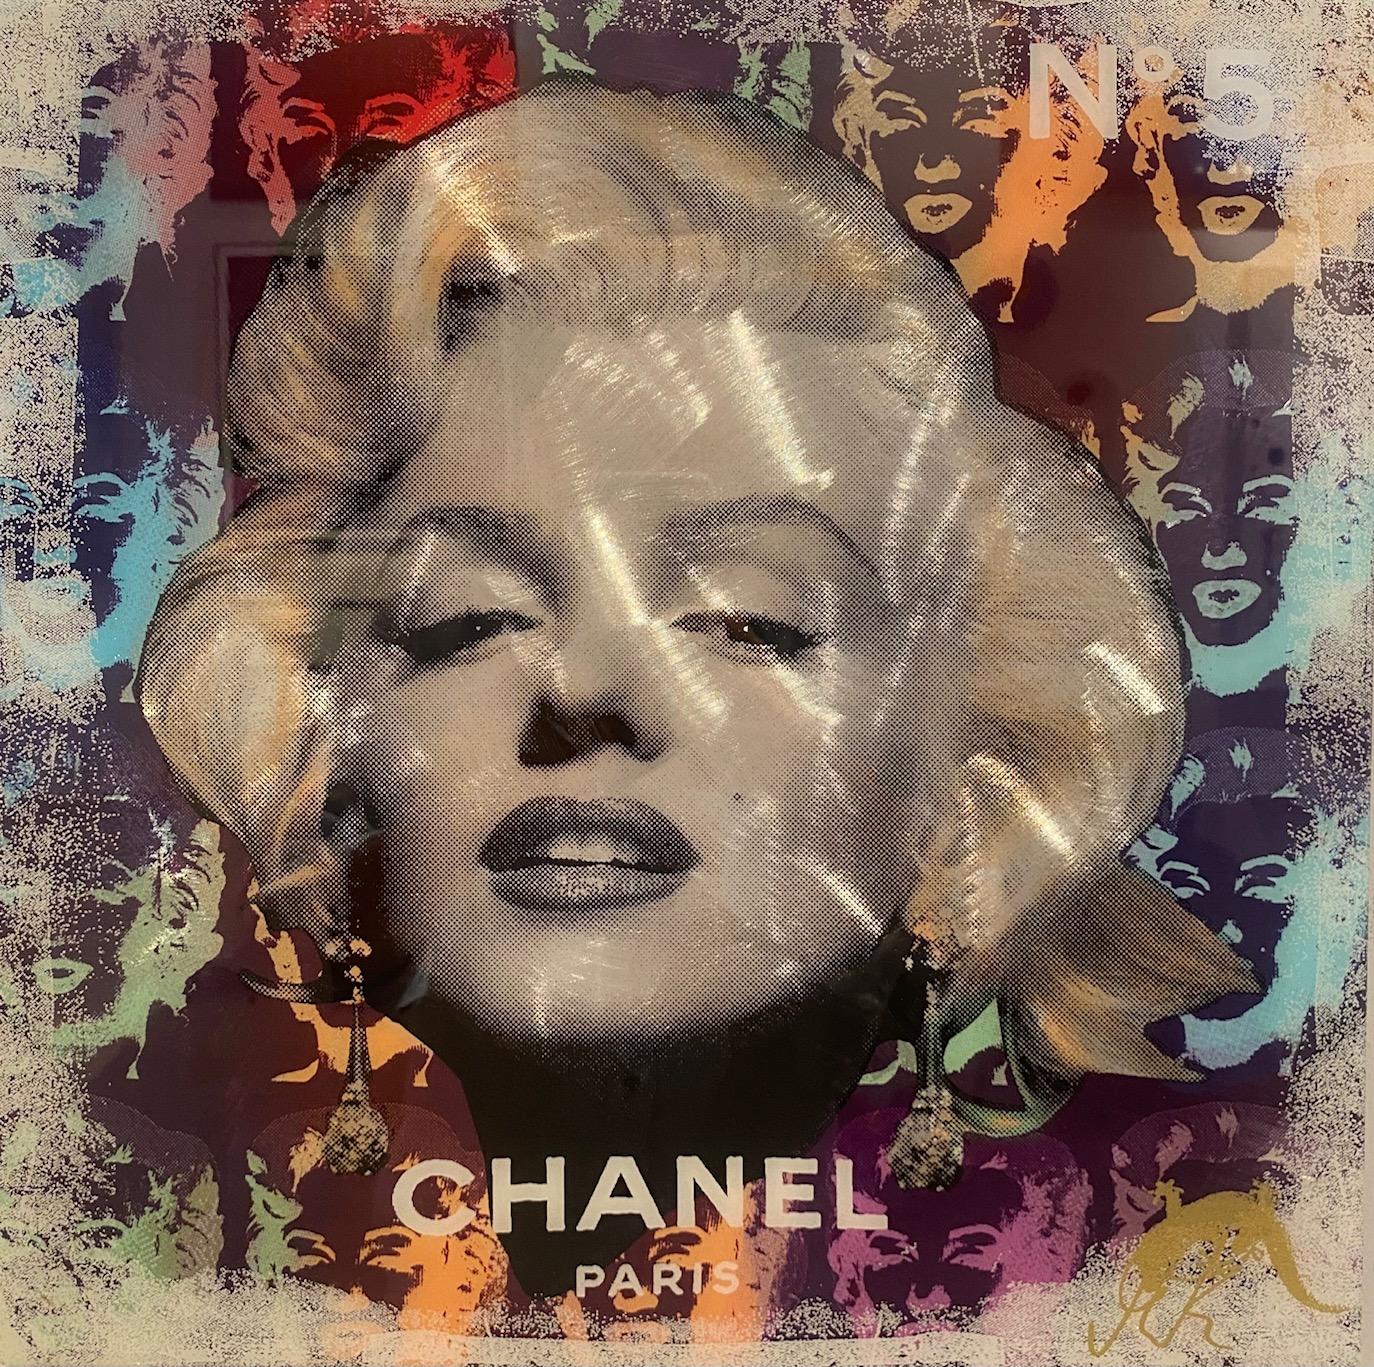 Chanel No. 5 - portrait contemporain original de l'icône pop art Marilyn Monroe